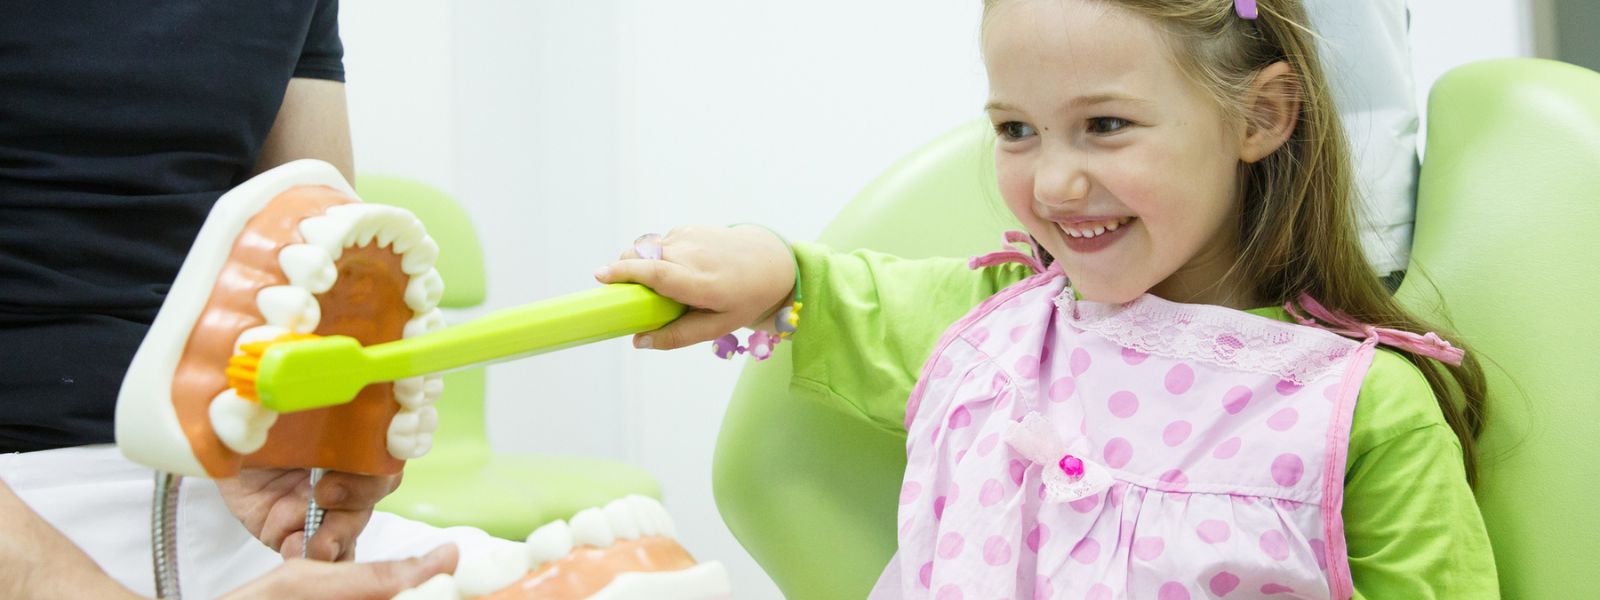 Small girl brushing a big Teeth Model